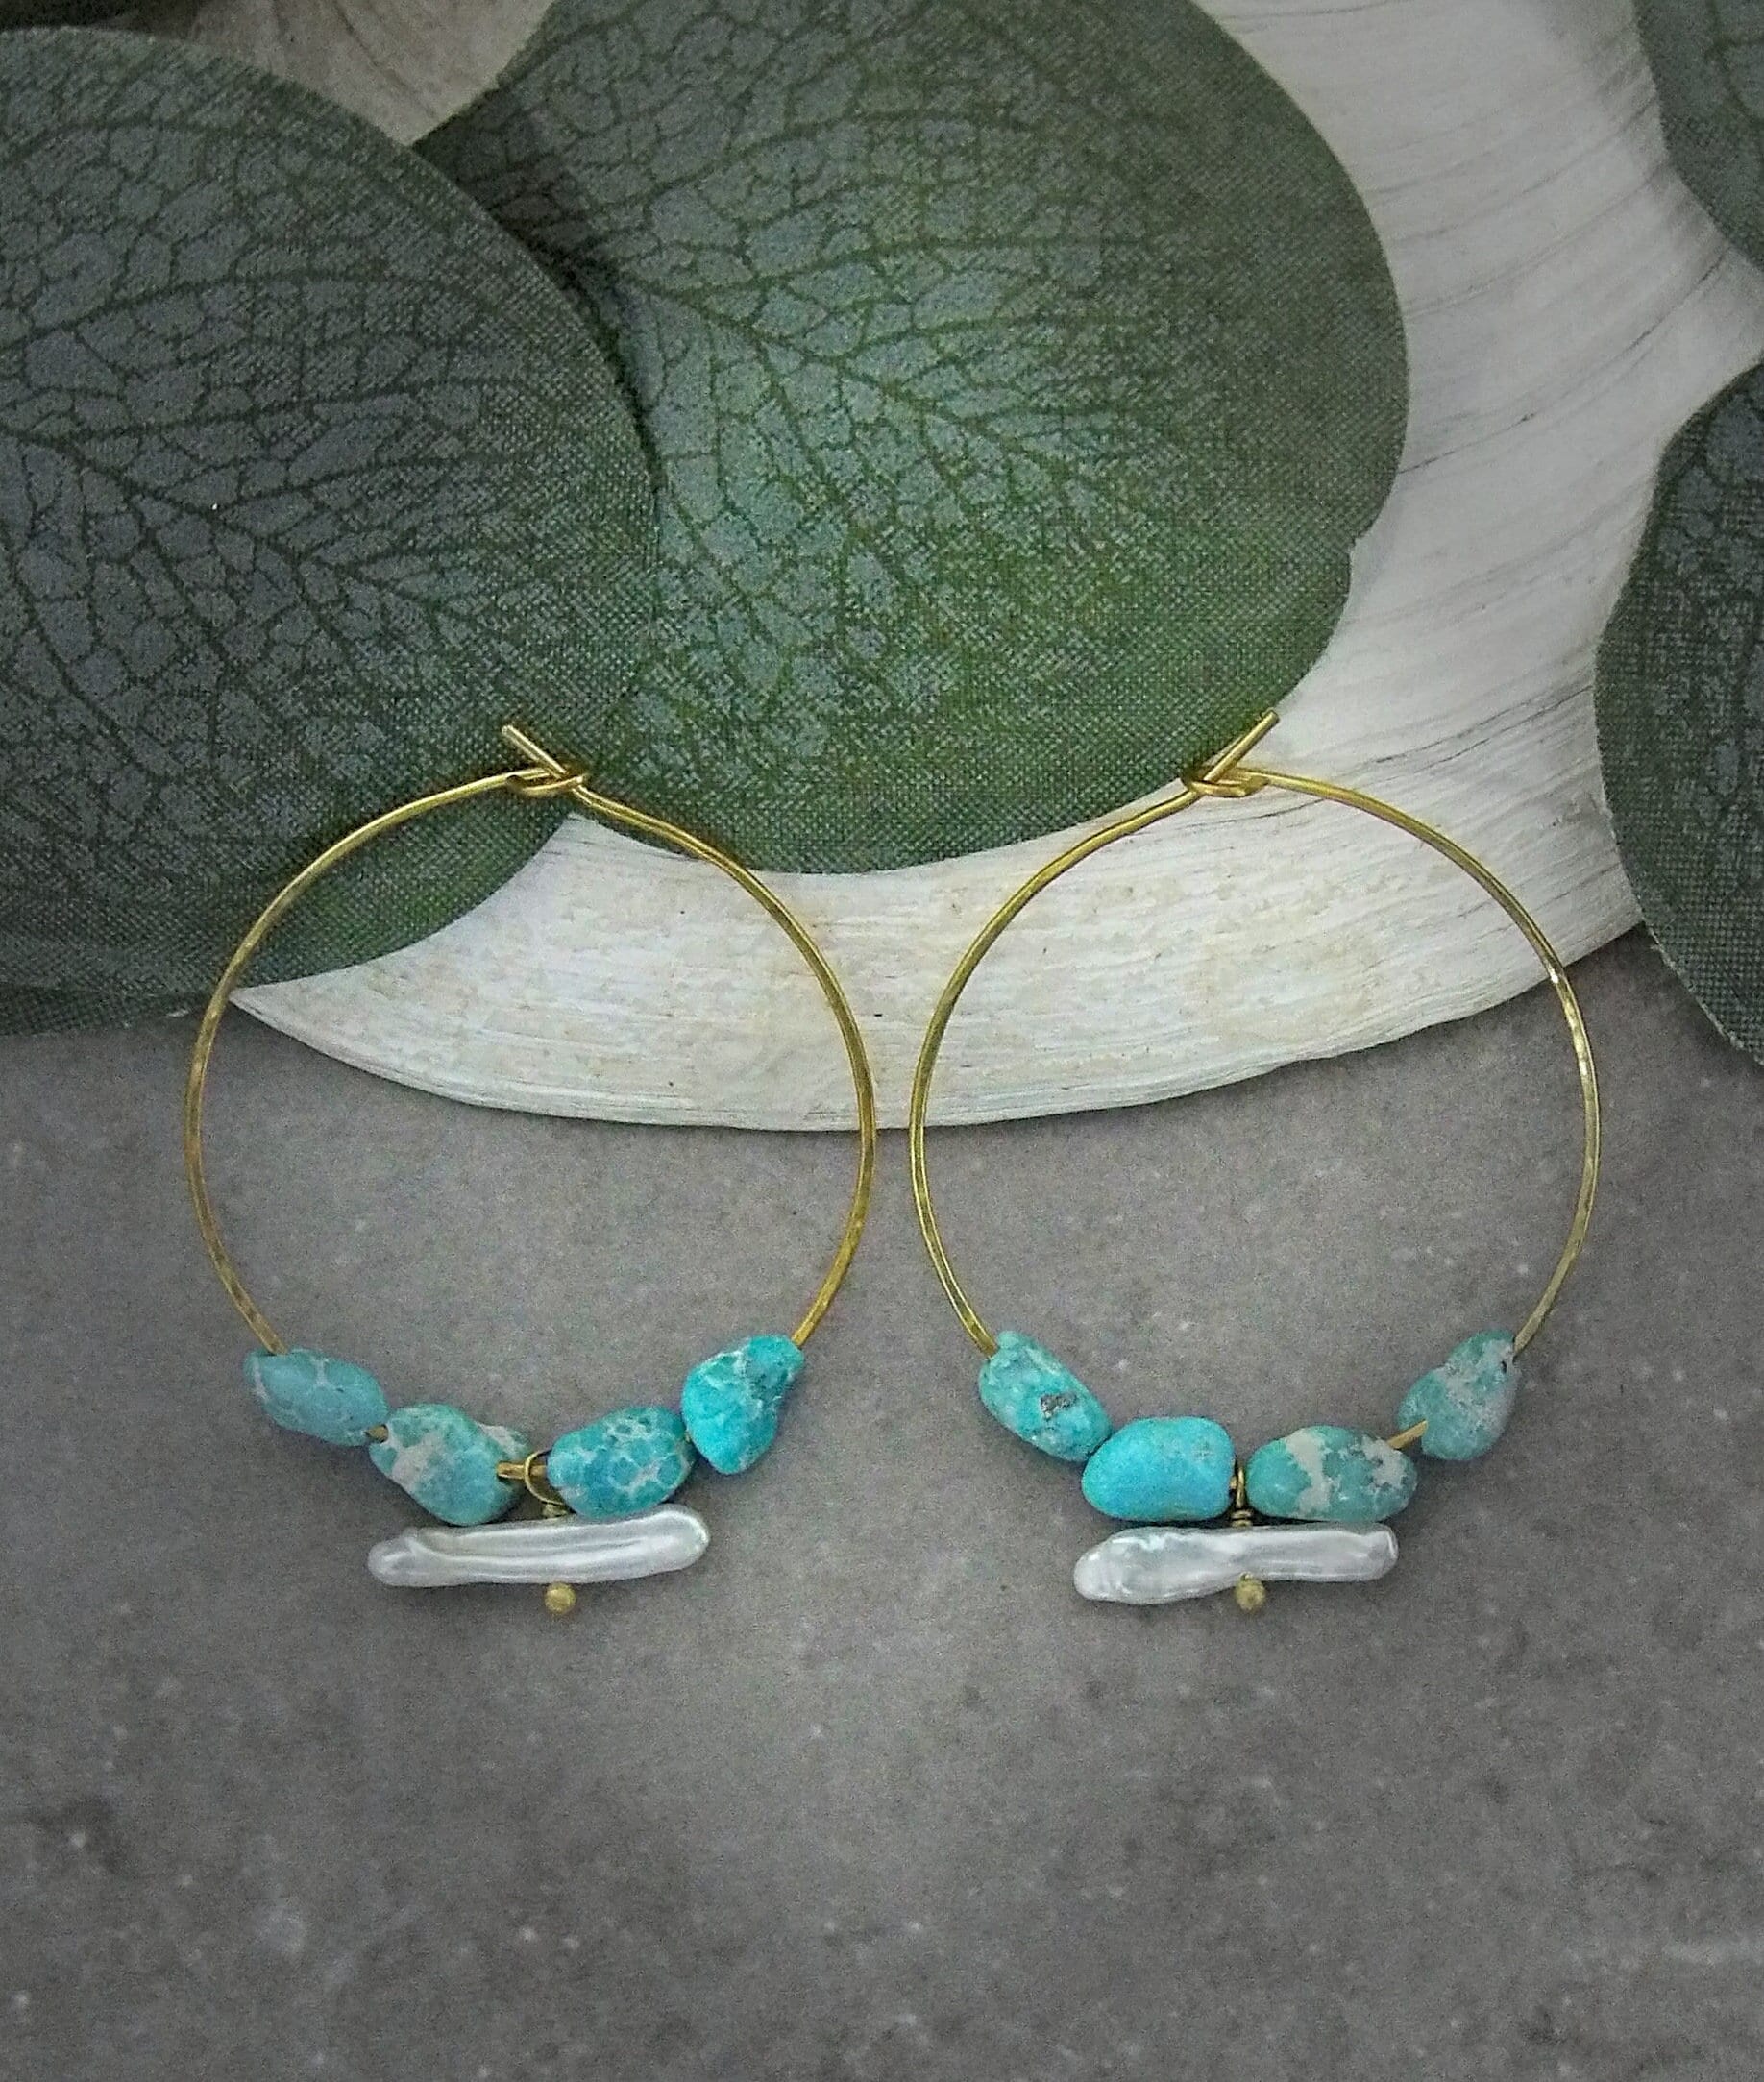 genuine turquoise earrings. Biwa stick pearl earrings. Bohemian turquoise hoop earrings. artisan turquoise earrings. siren jewelry